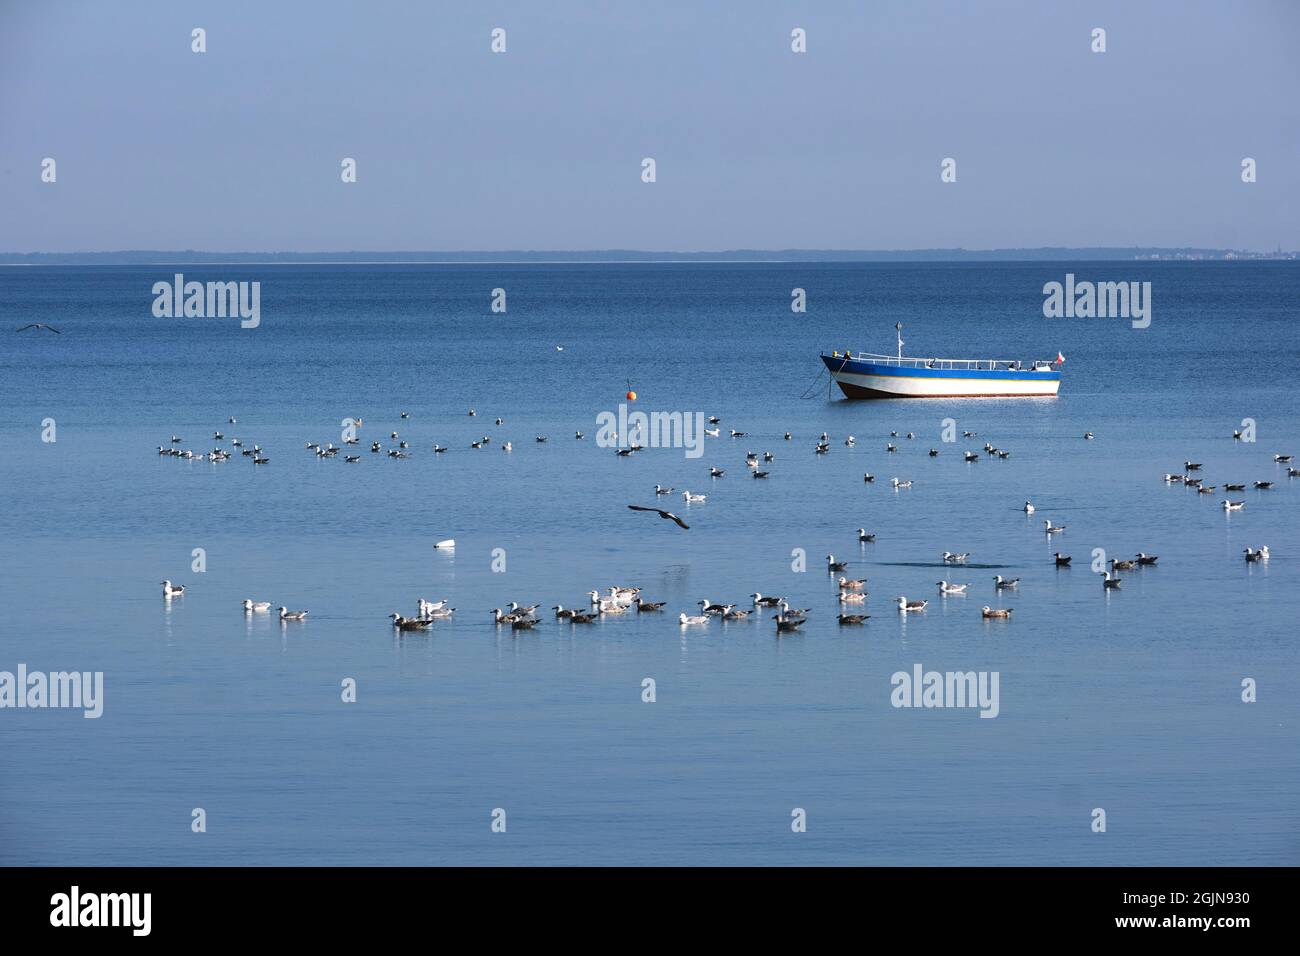 Single boat and water birds on Pucka Bay, Baltic Sea, Poland Stock Photo